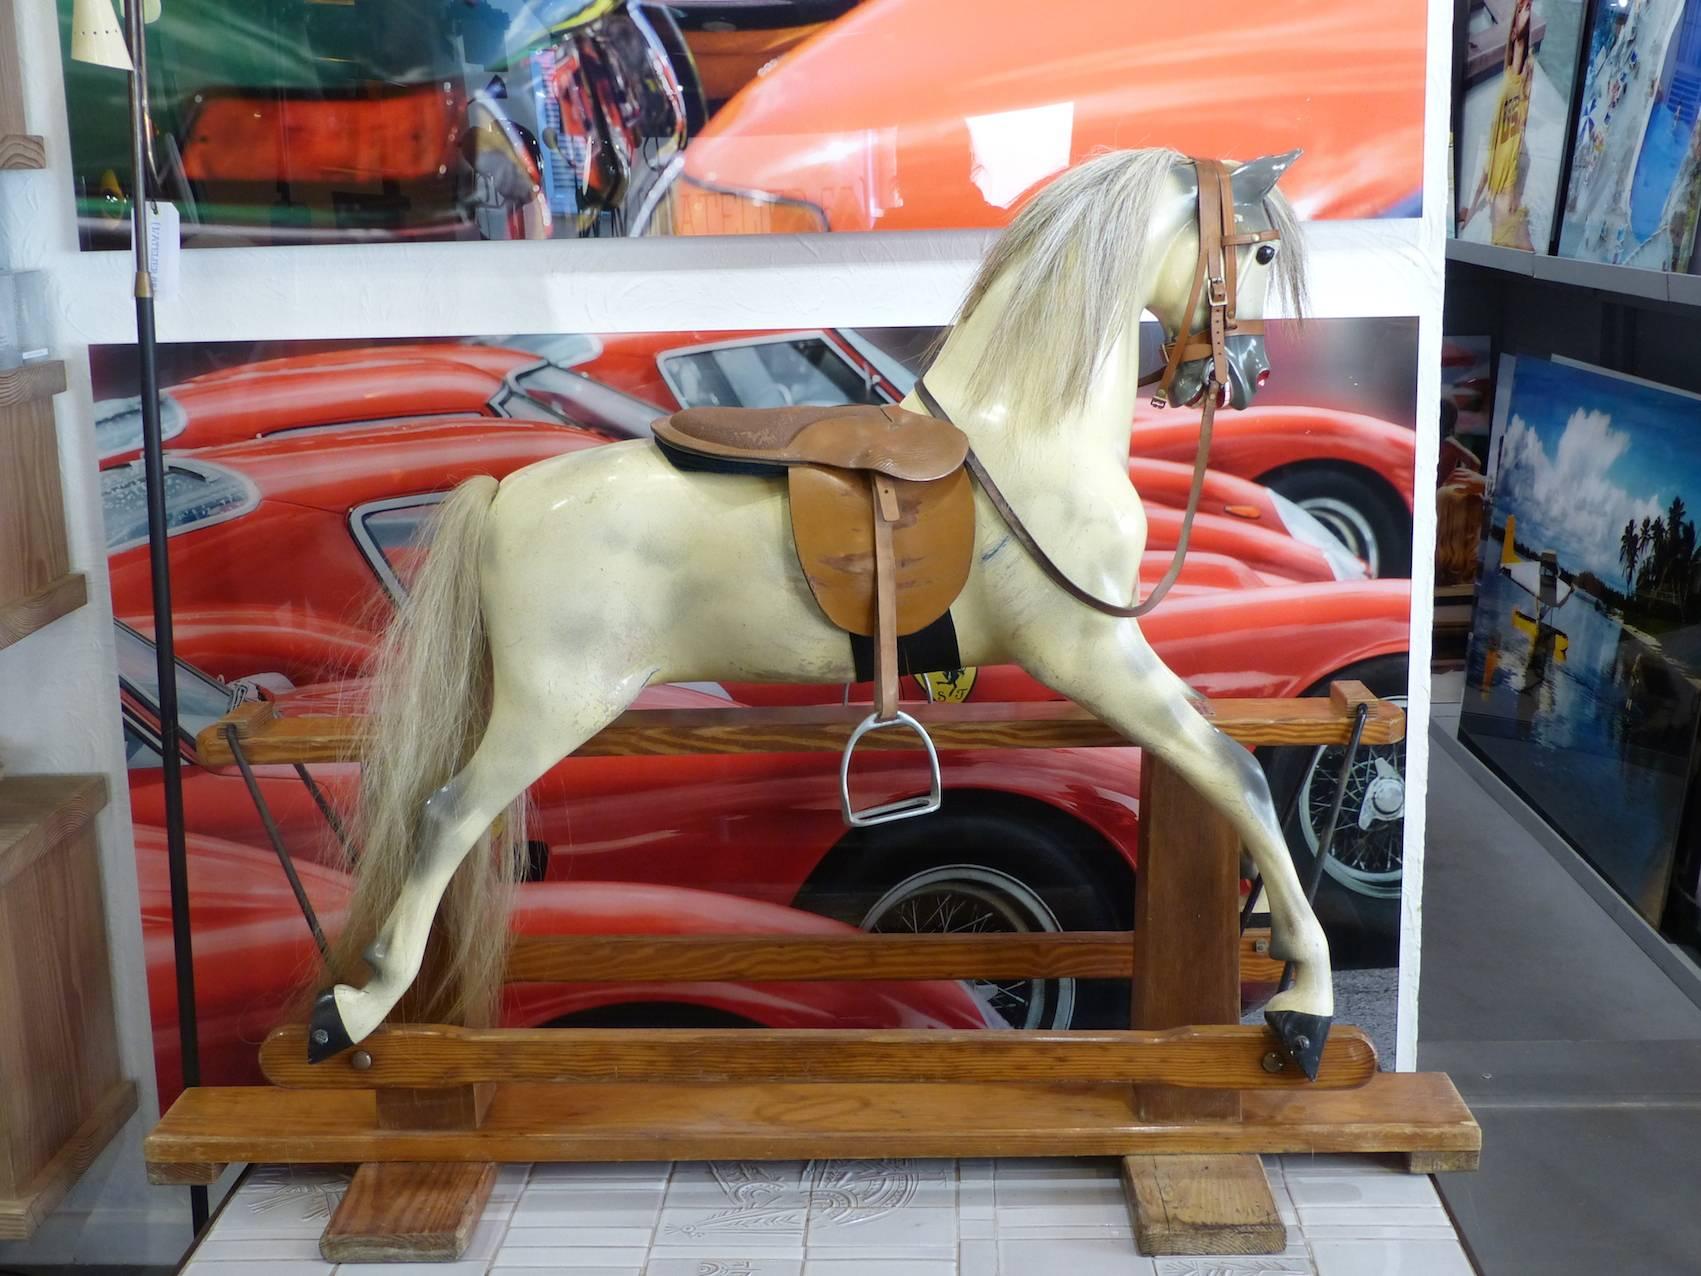 Fantastic rocking horse by Haddon Rockers, circa 1970
Very good condition.